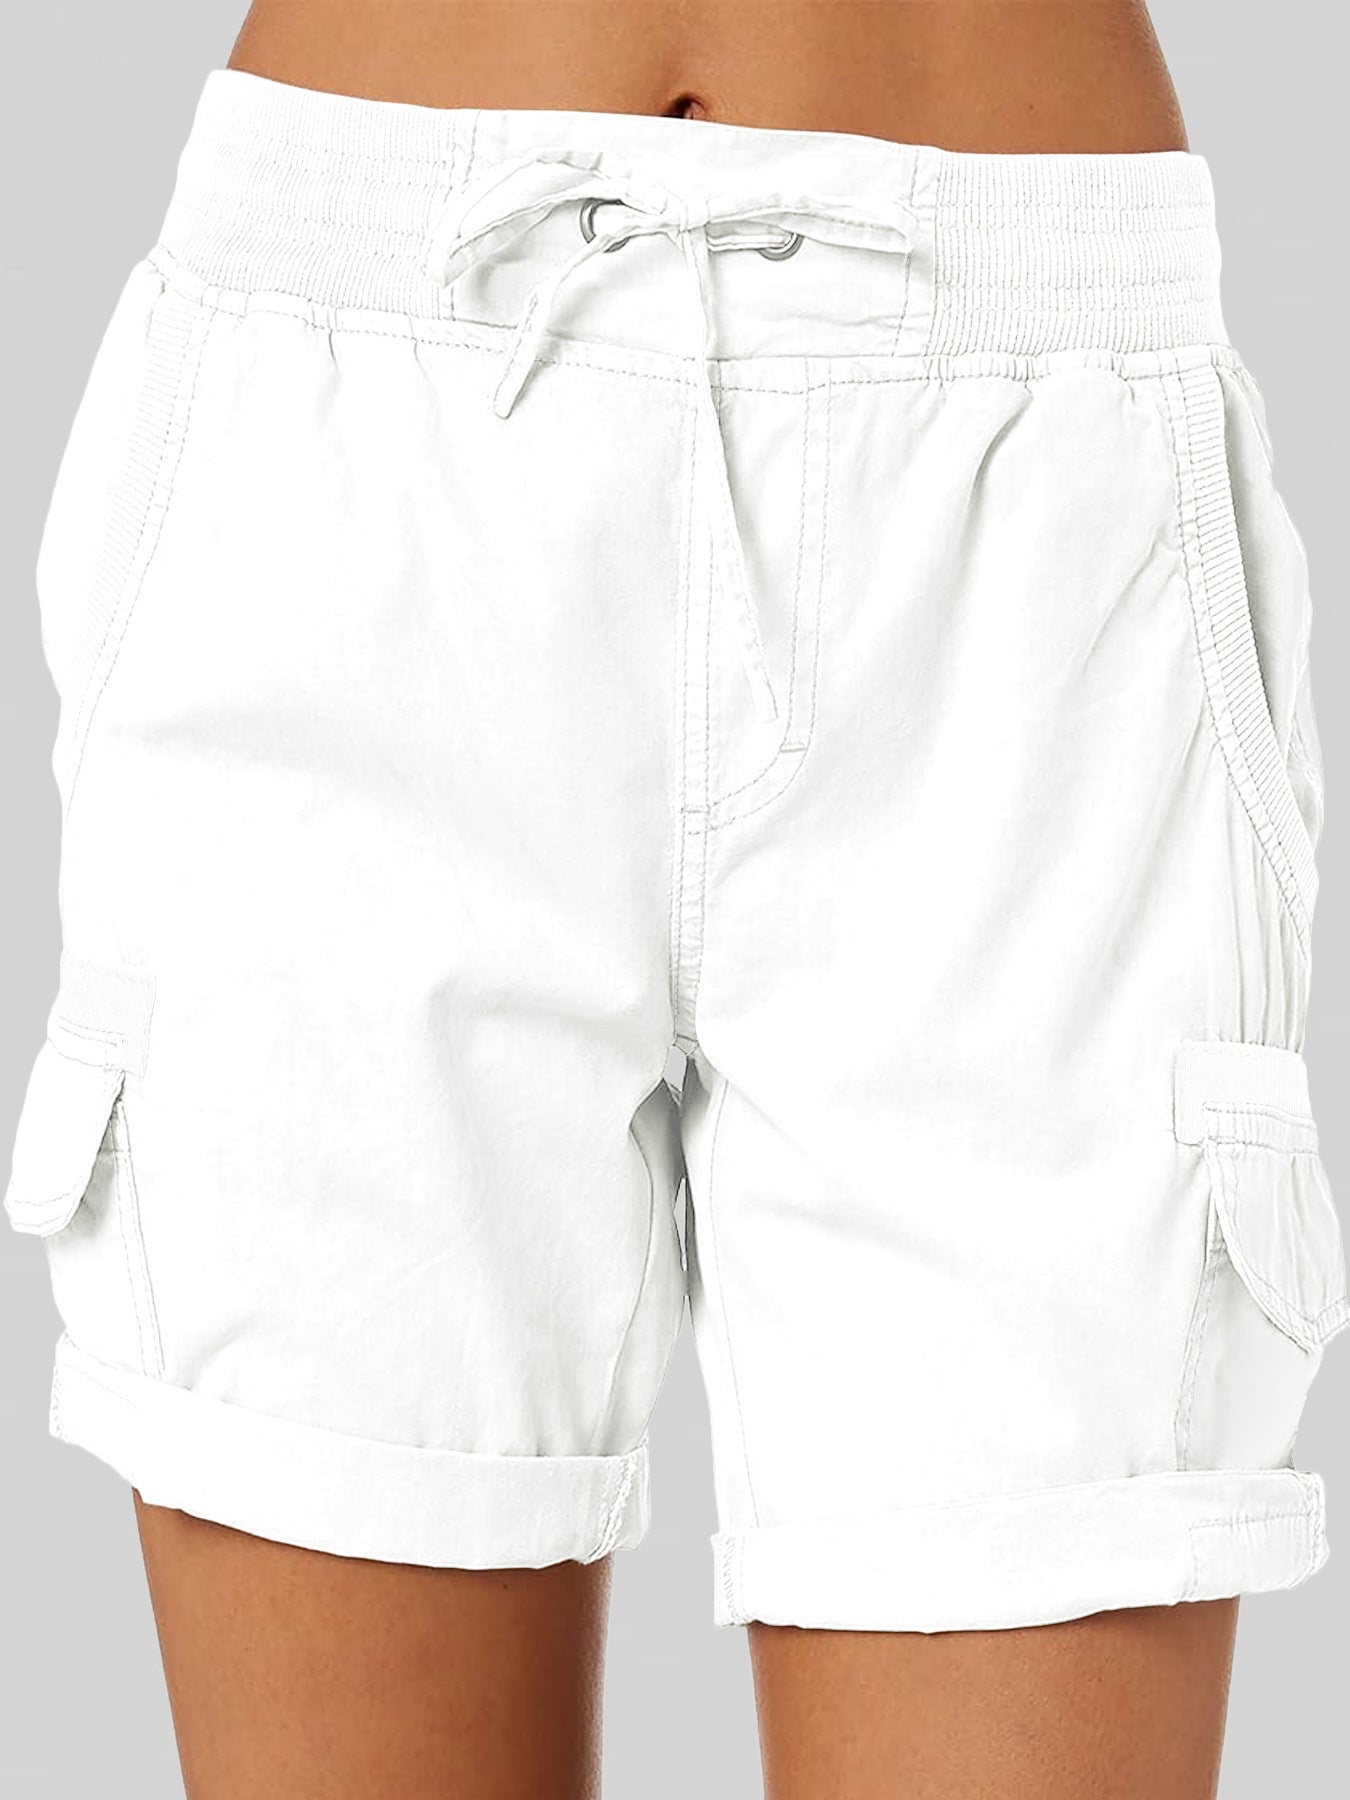 Cross-Border Foreign Trade Women's High Waist Overalls Casual Pants Cotton Linen Shorts Thin A- line Loose Wide Leg Shorts